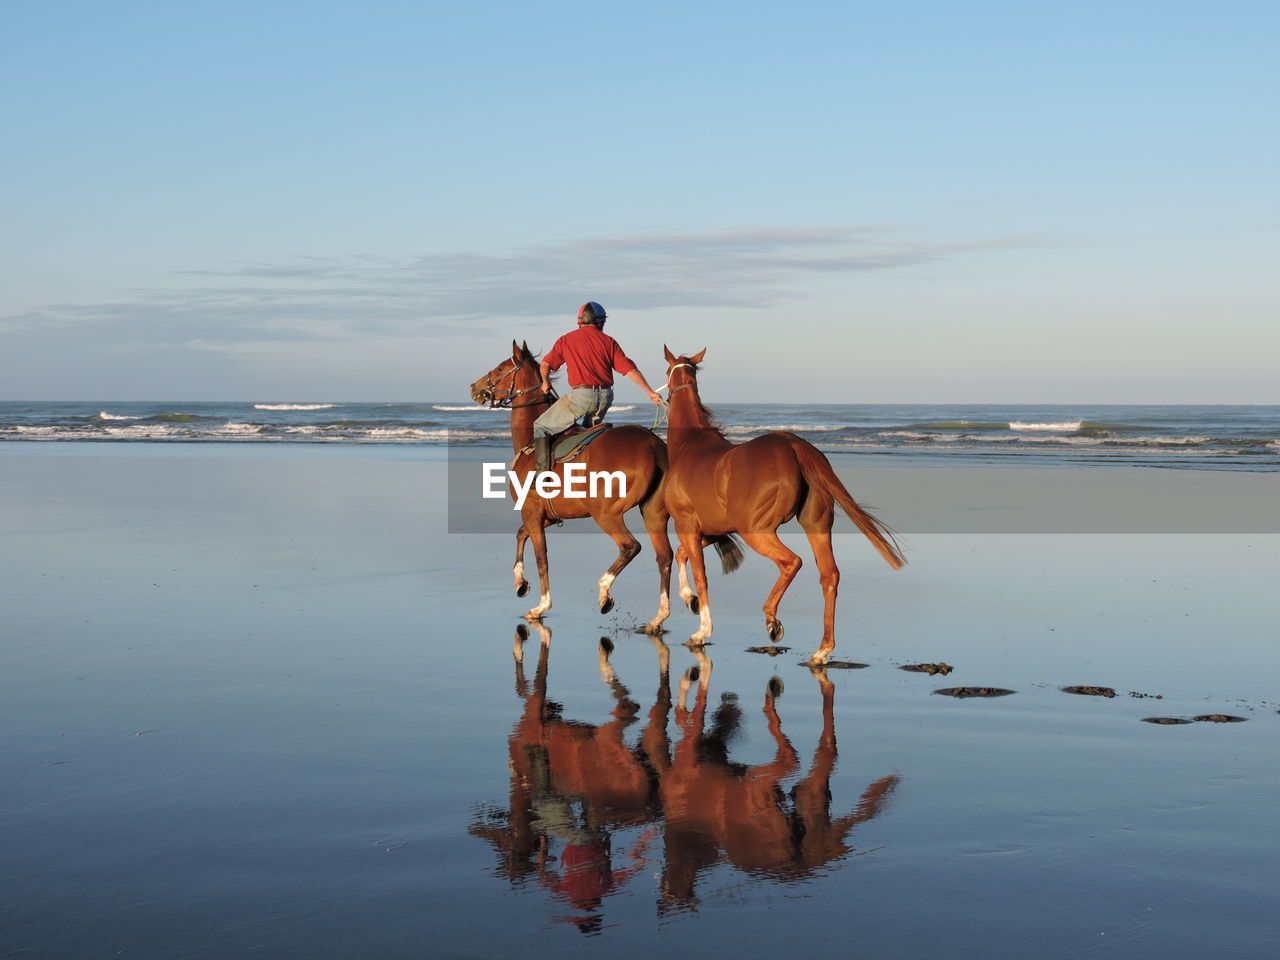 Man riding on horses at beach against sky